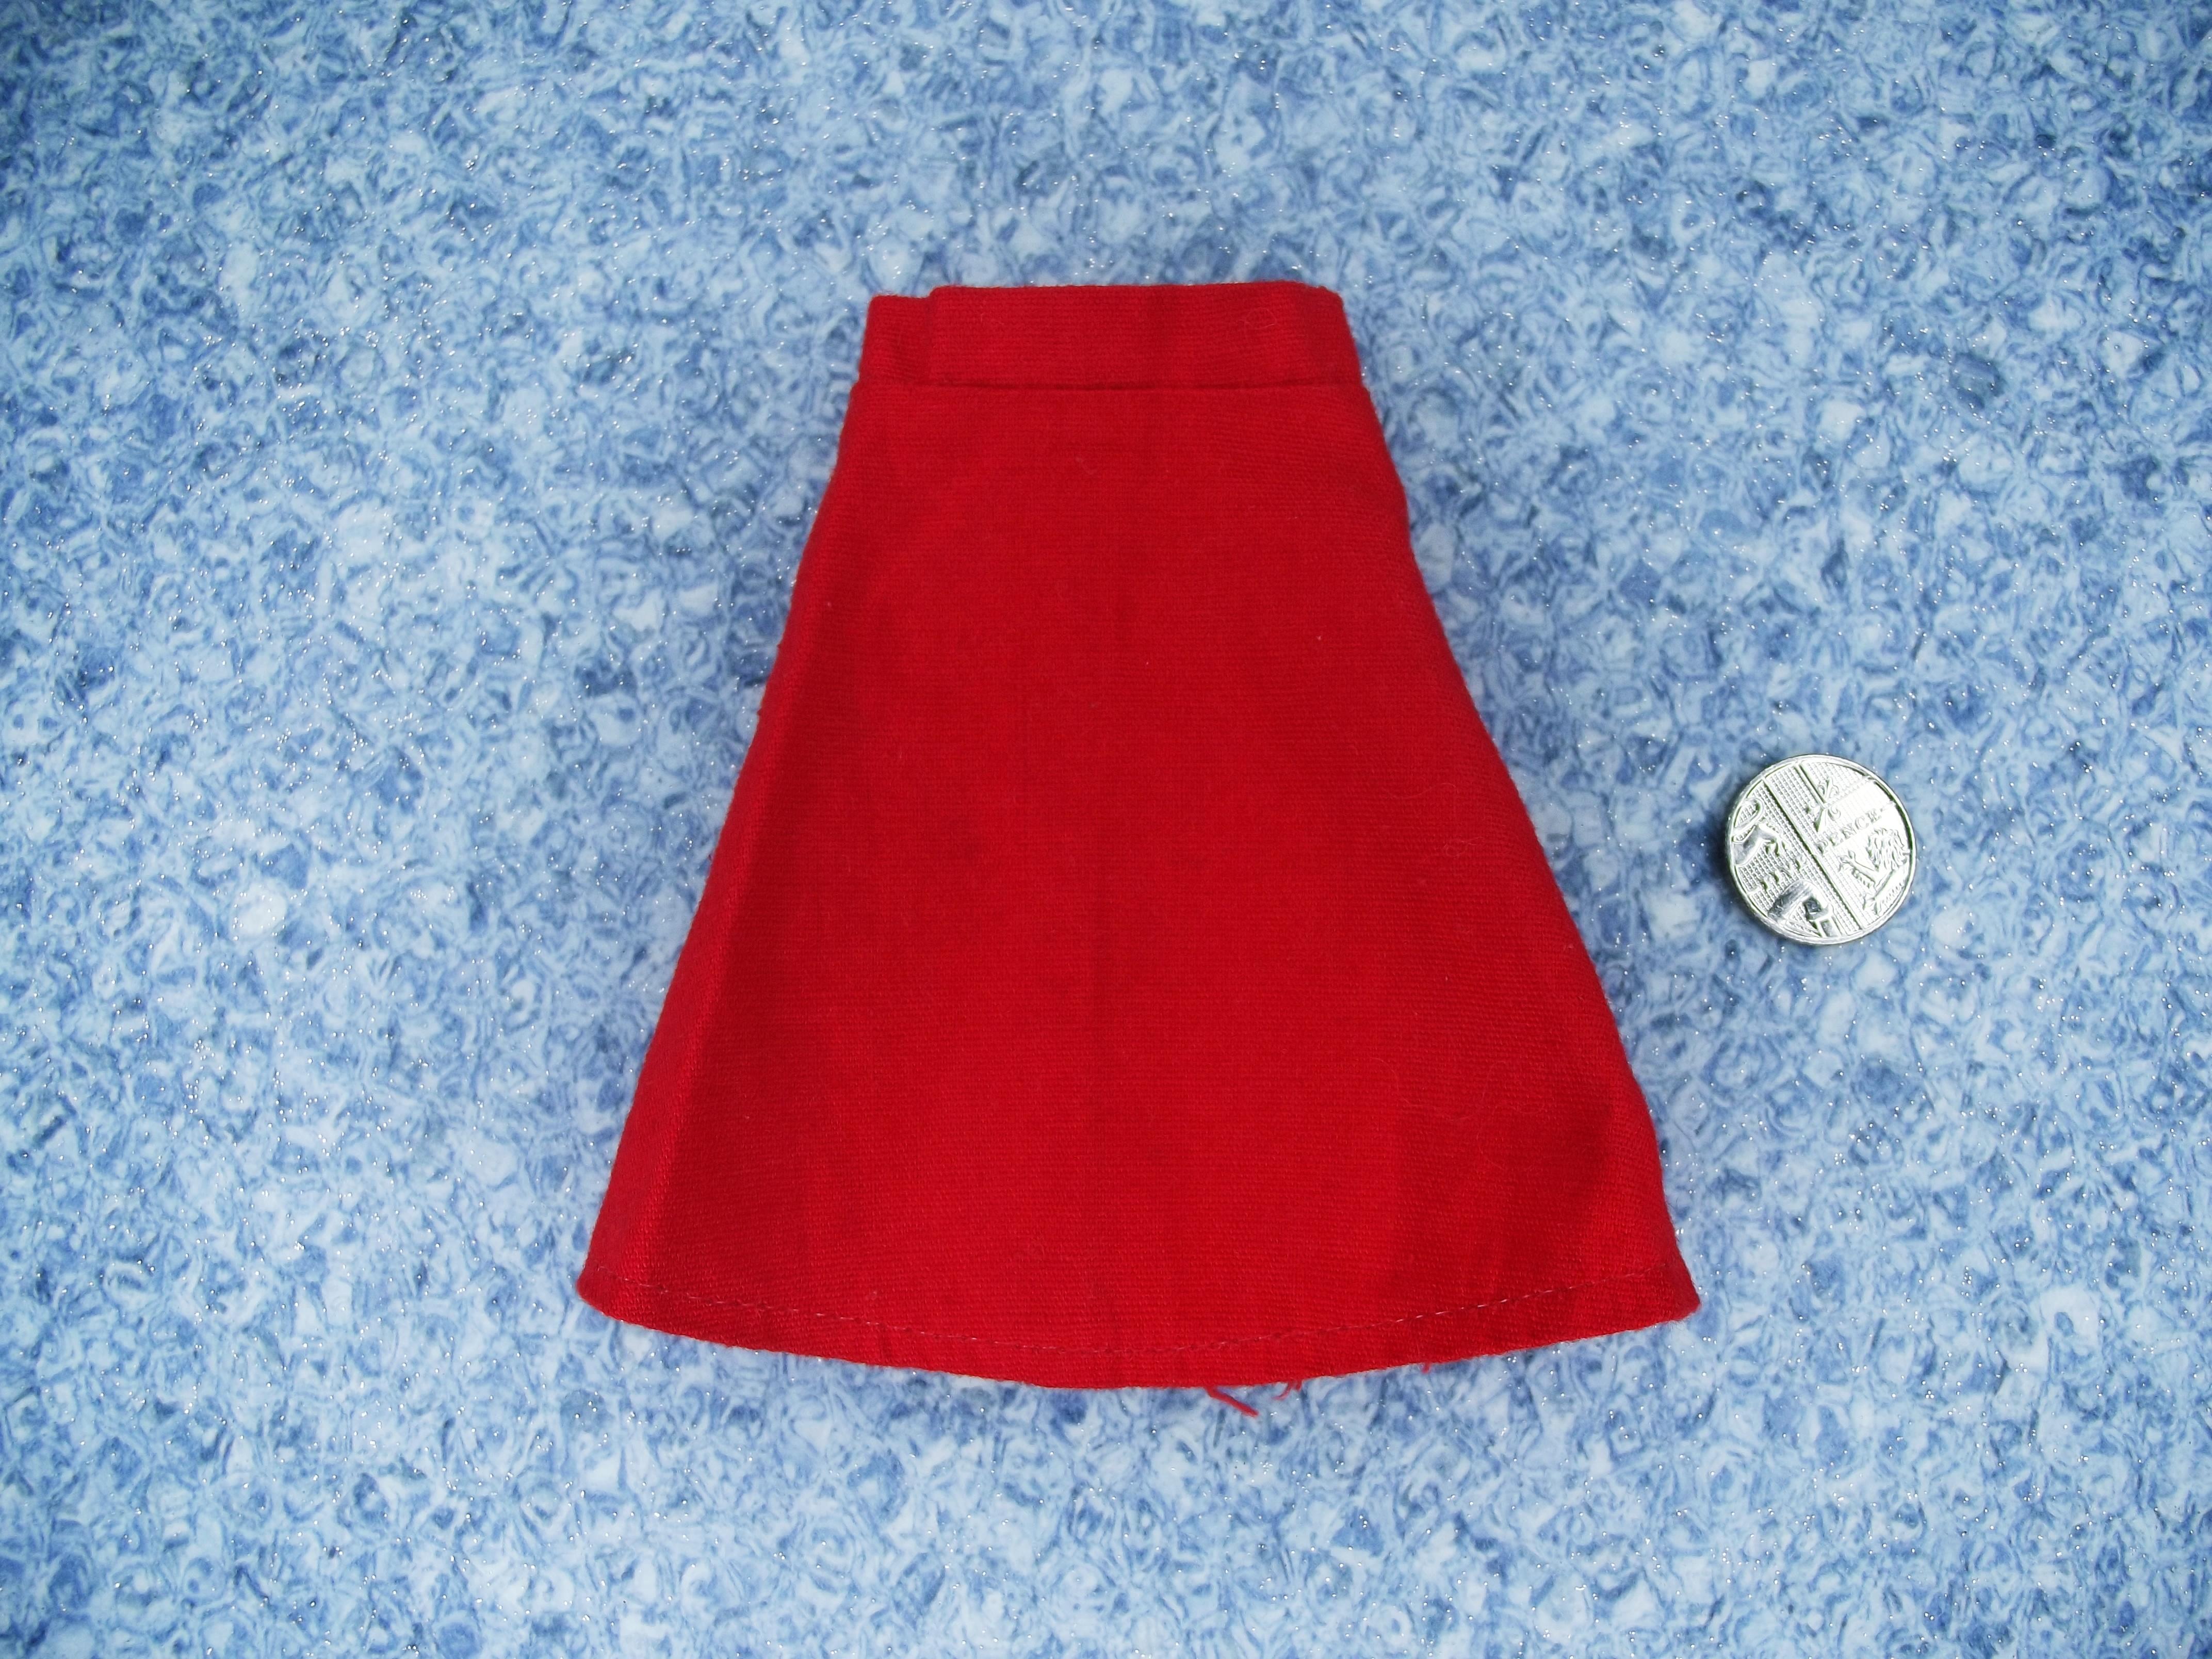 1976 Pedigree Sindy Fashion Doll Disco Date Red Skirt